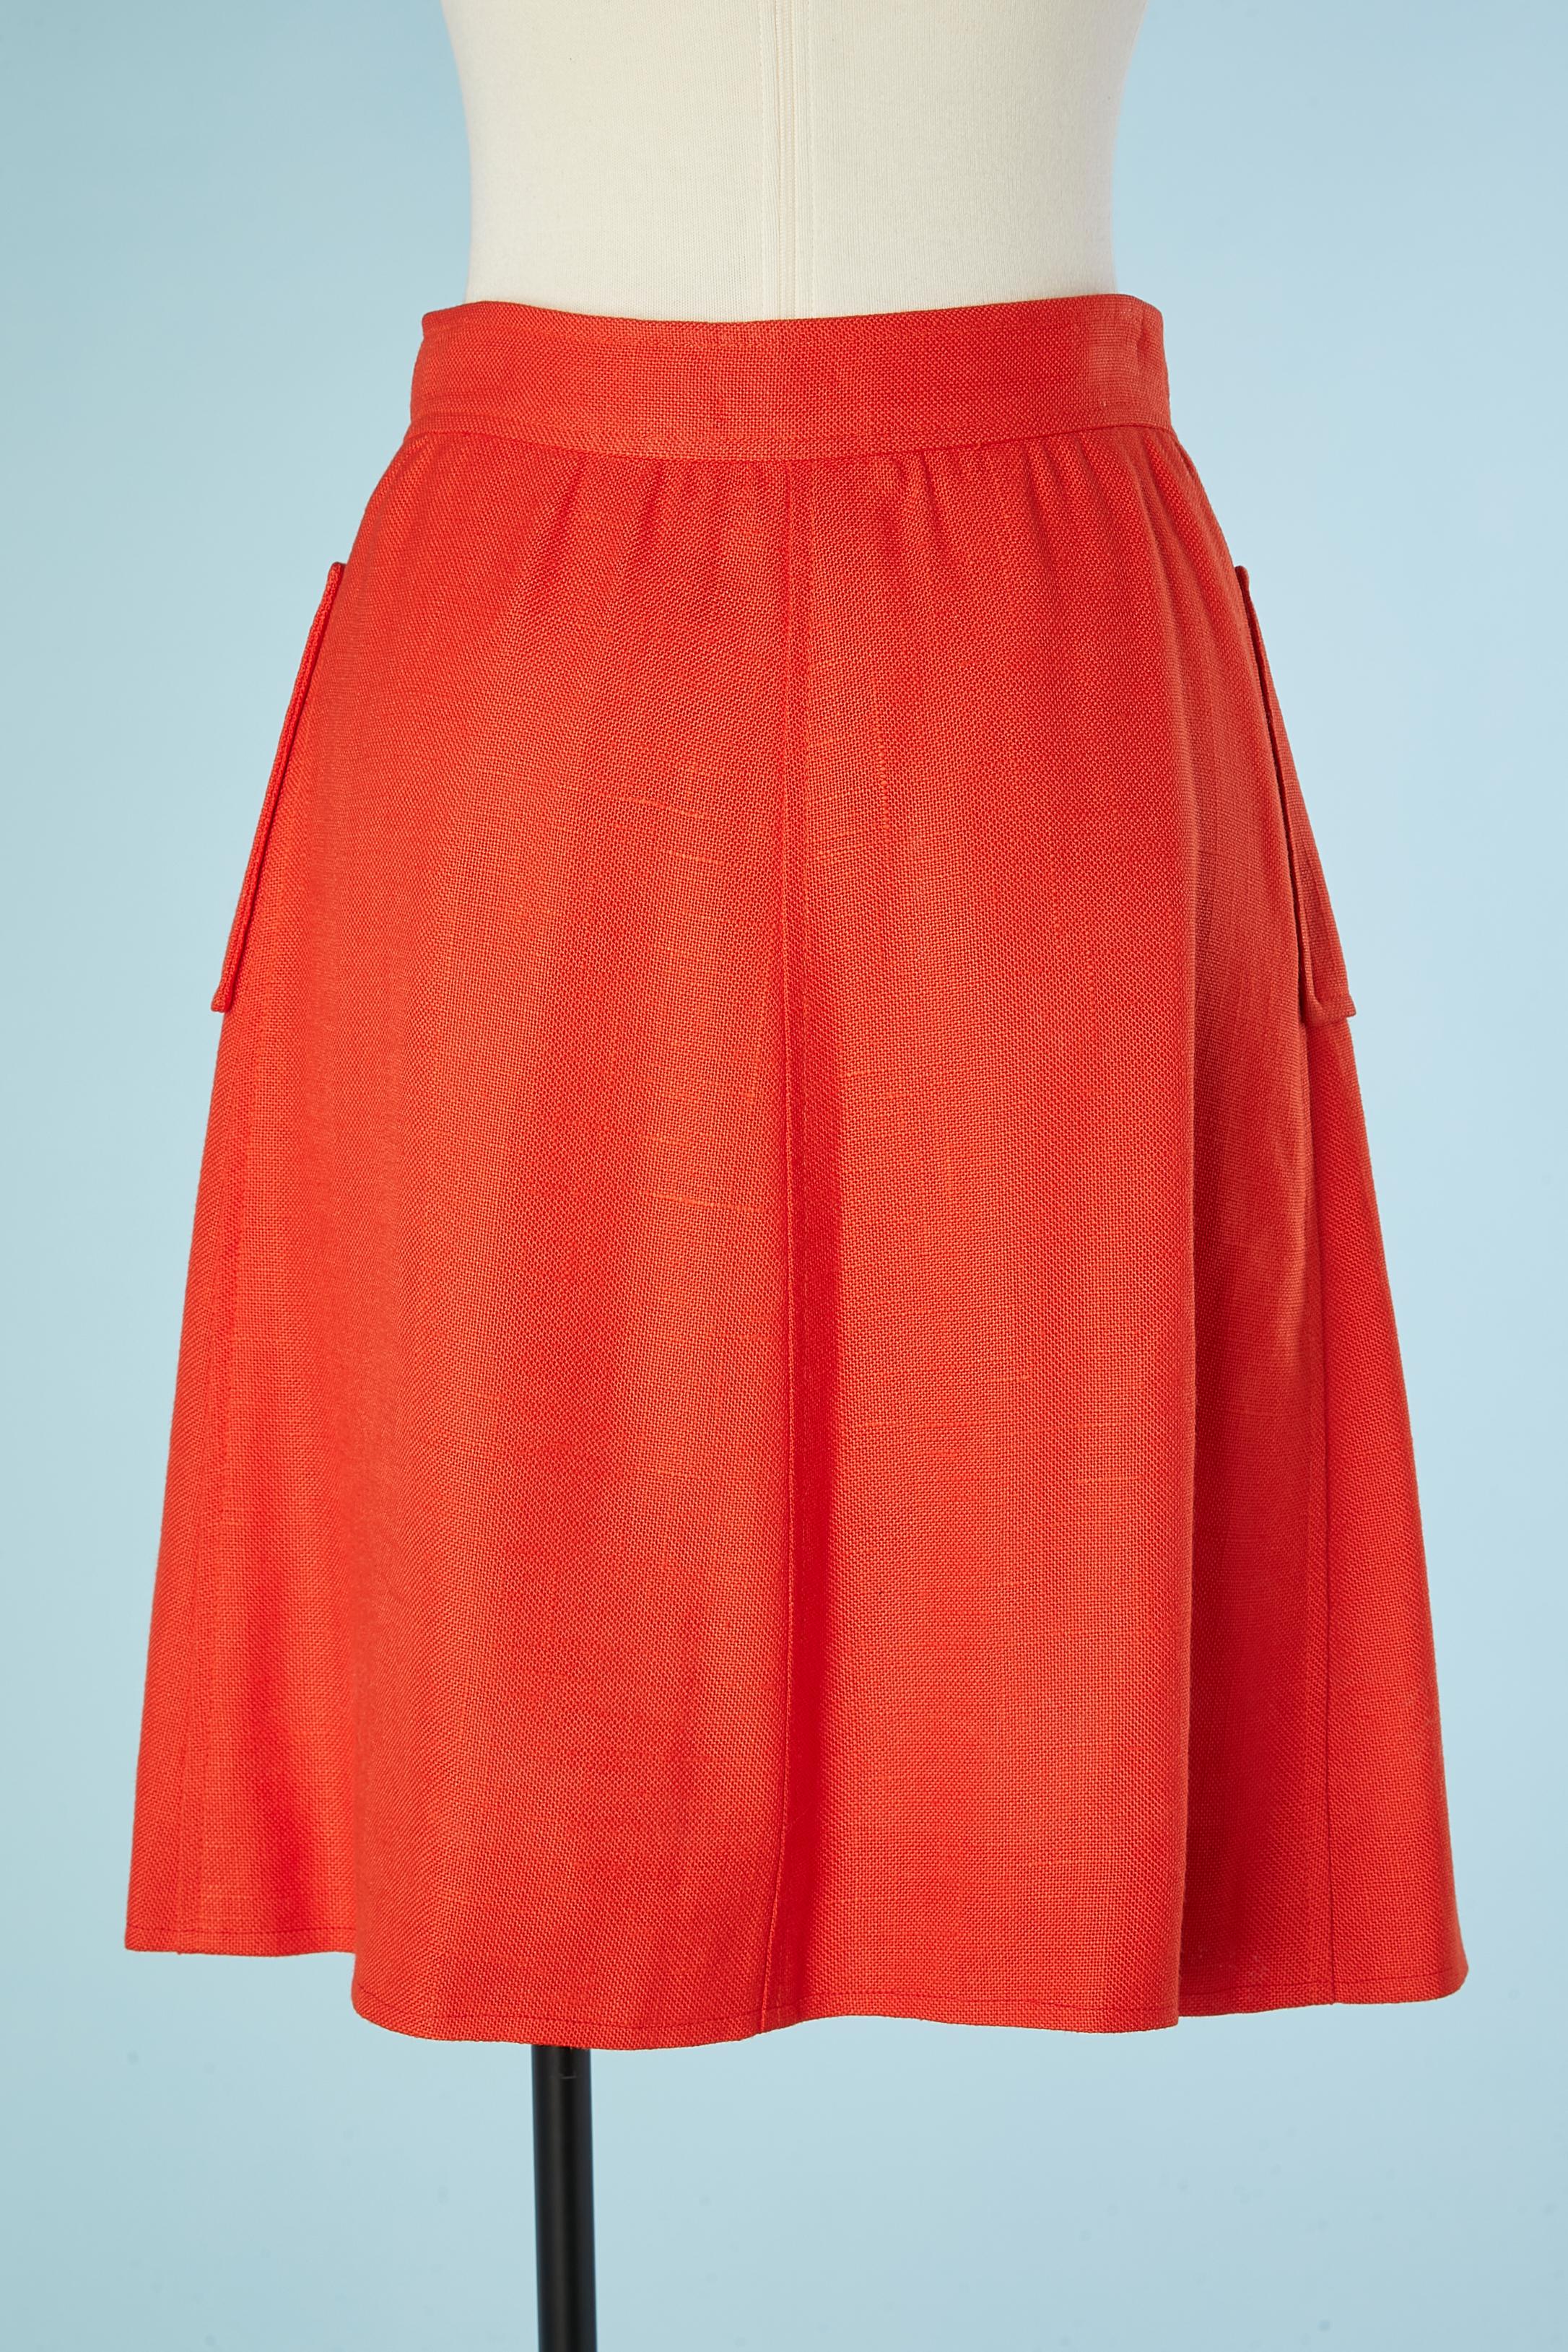 Orange acetate A Line skirt with white snaps middle front Courrèges  In Excellent Condition For Sale In Saint-Ouen-Sur-Seine, FR